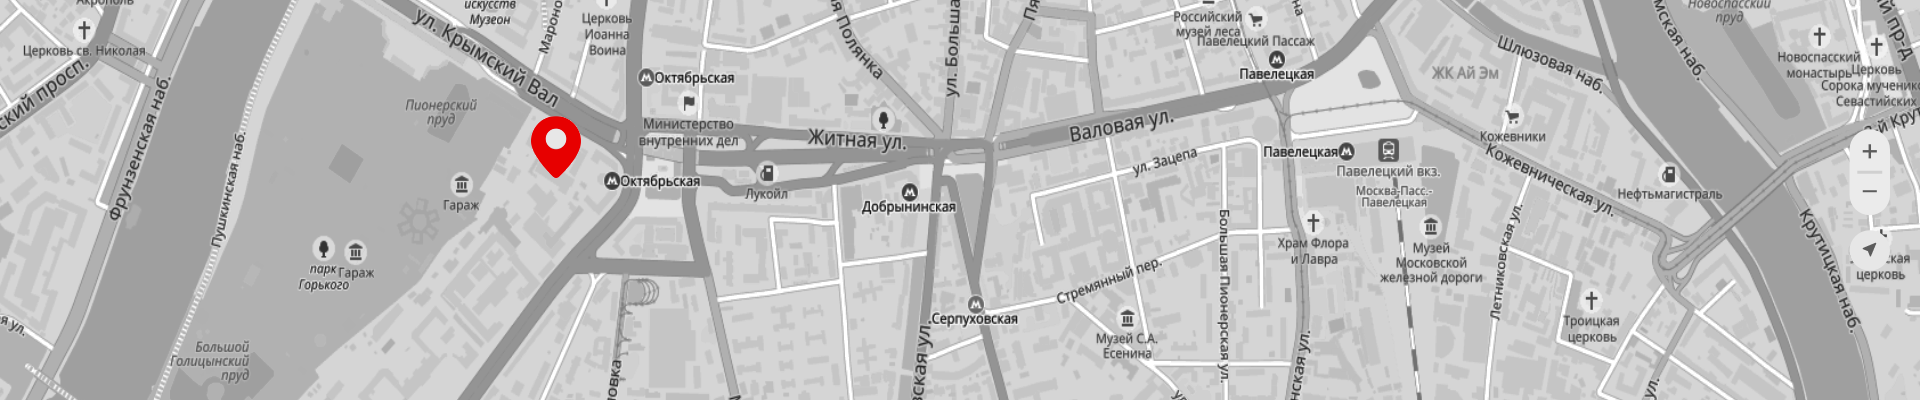 Карта сайта Tovarishch